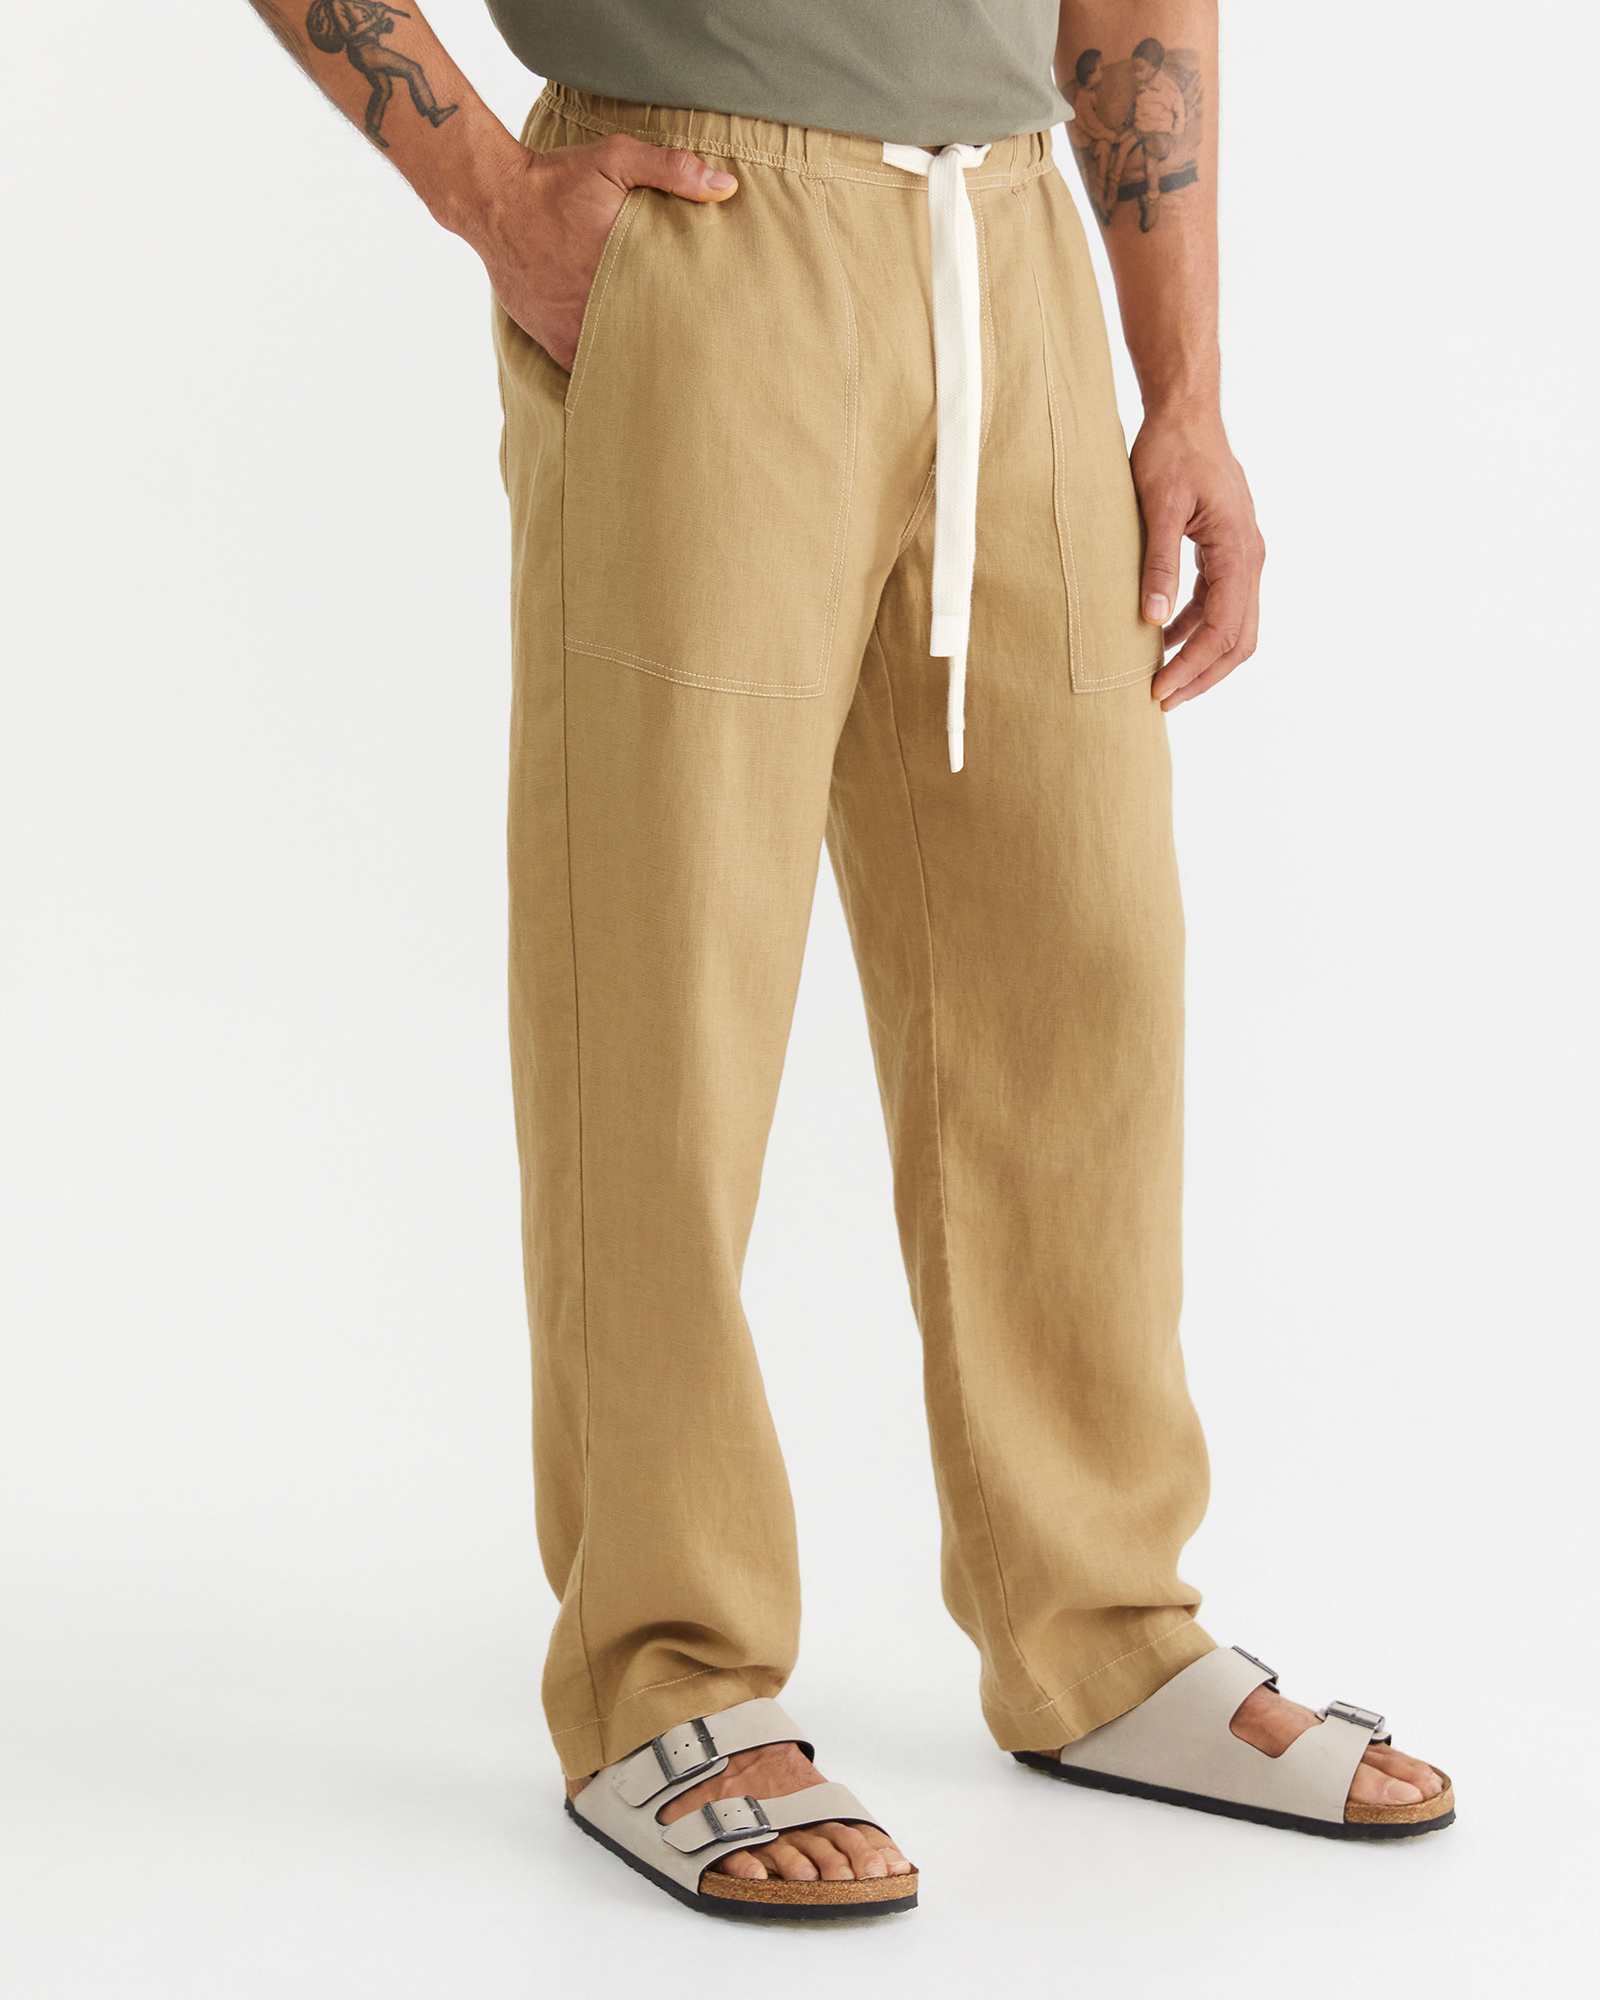 Men Linen blend Casual Pants Trousers Long Loose Drawstring Elastic Waist  S-5XL | eBay